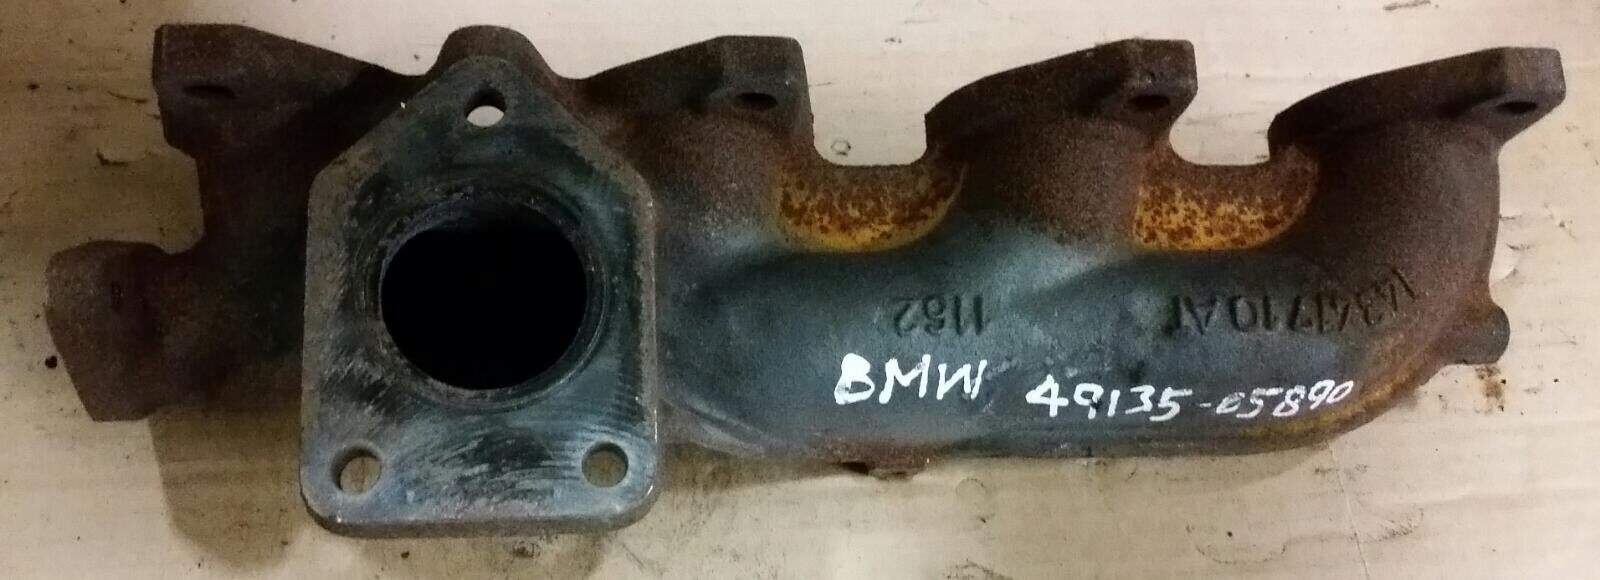 Exhaust Manifold  BMW 120 d (E81 / E82 / E88) 49135-05840, 11658506892